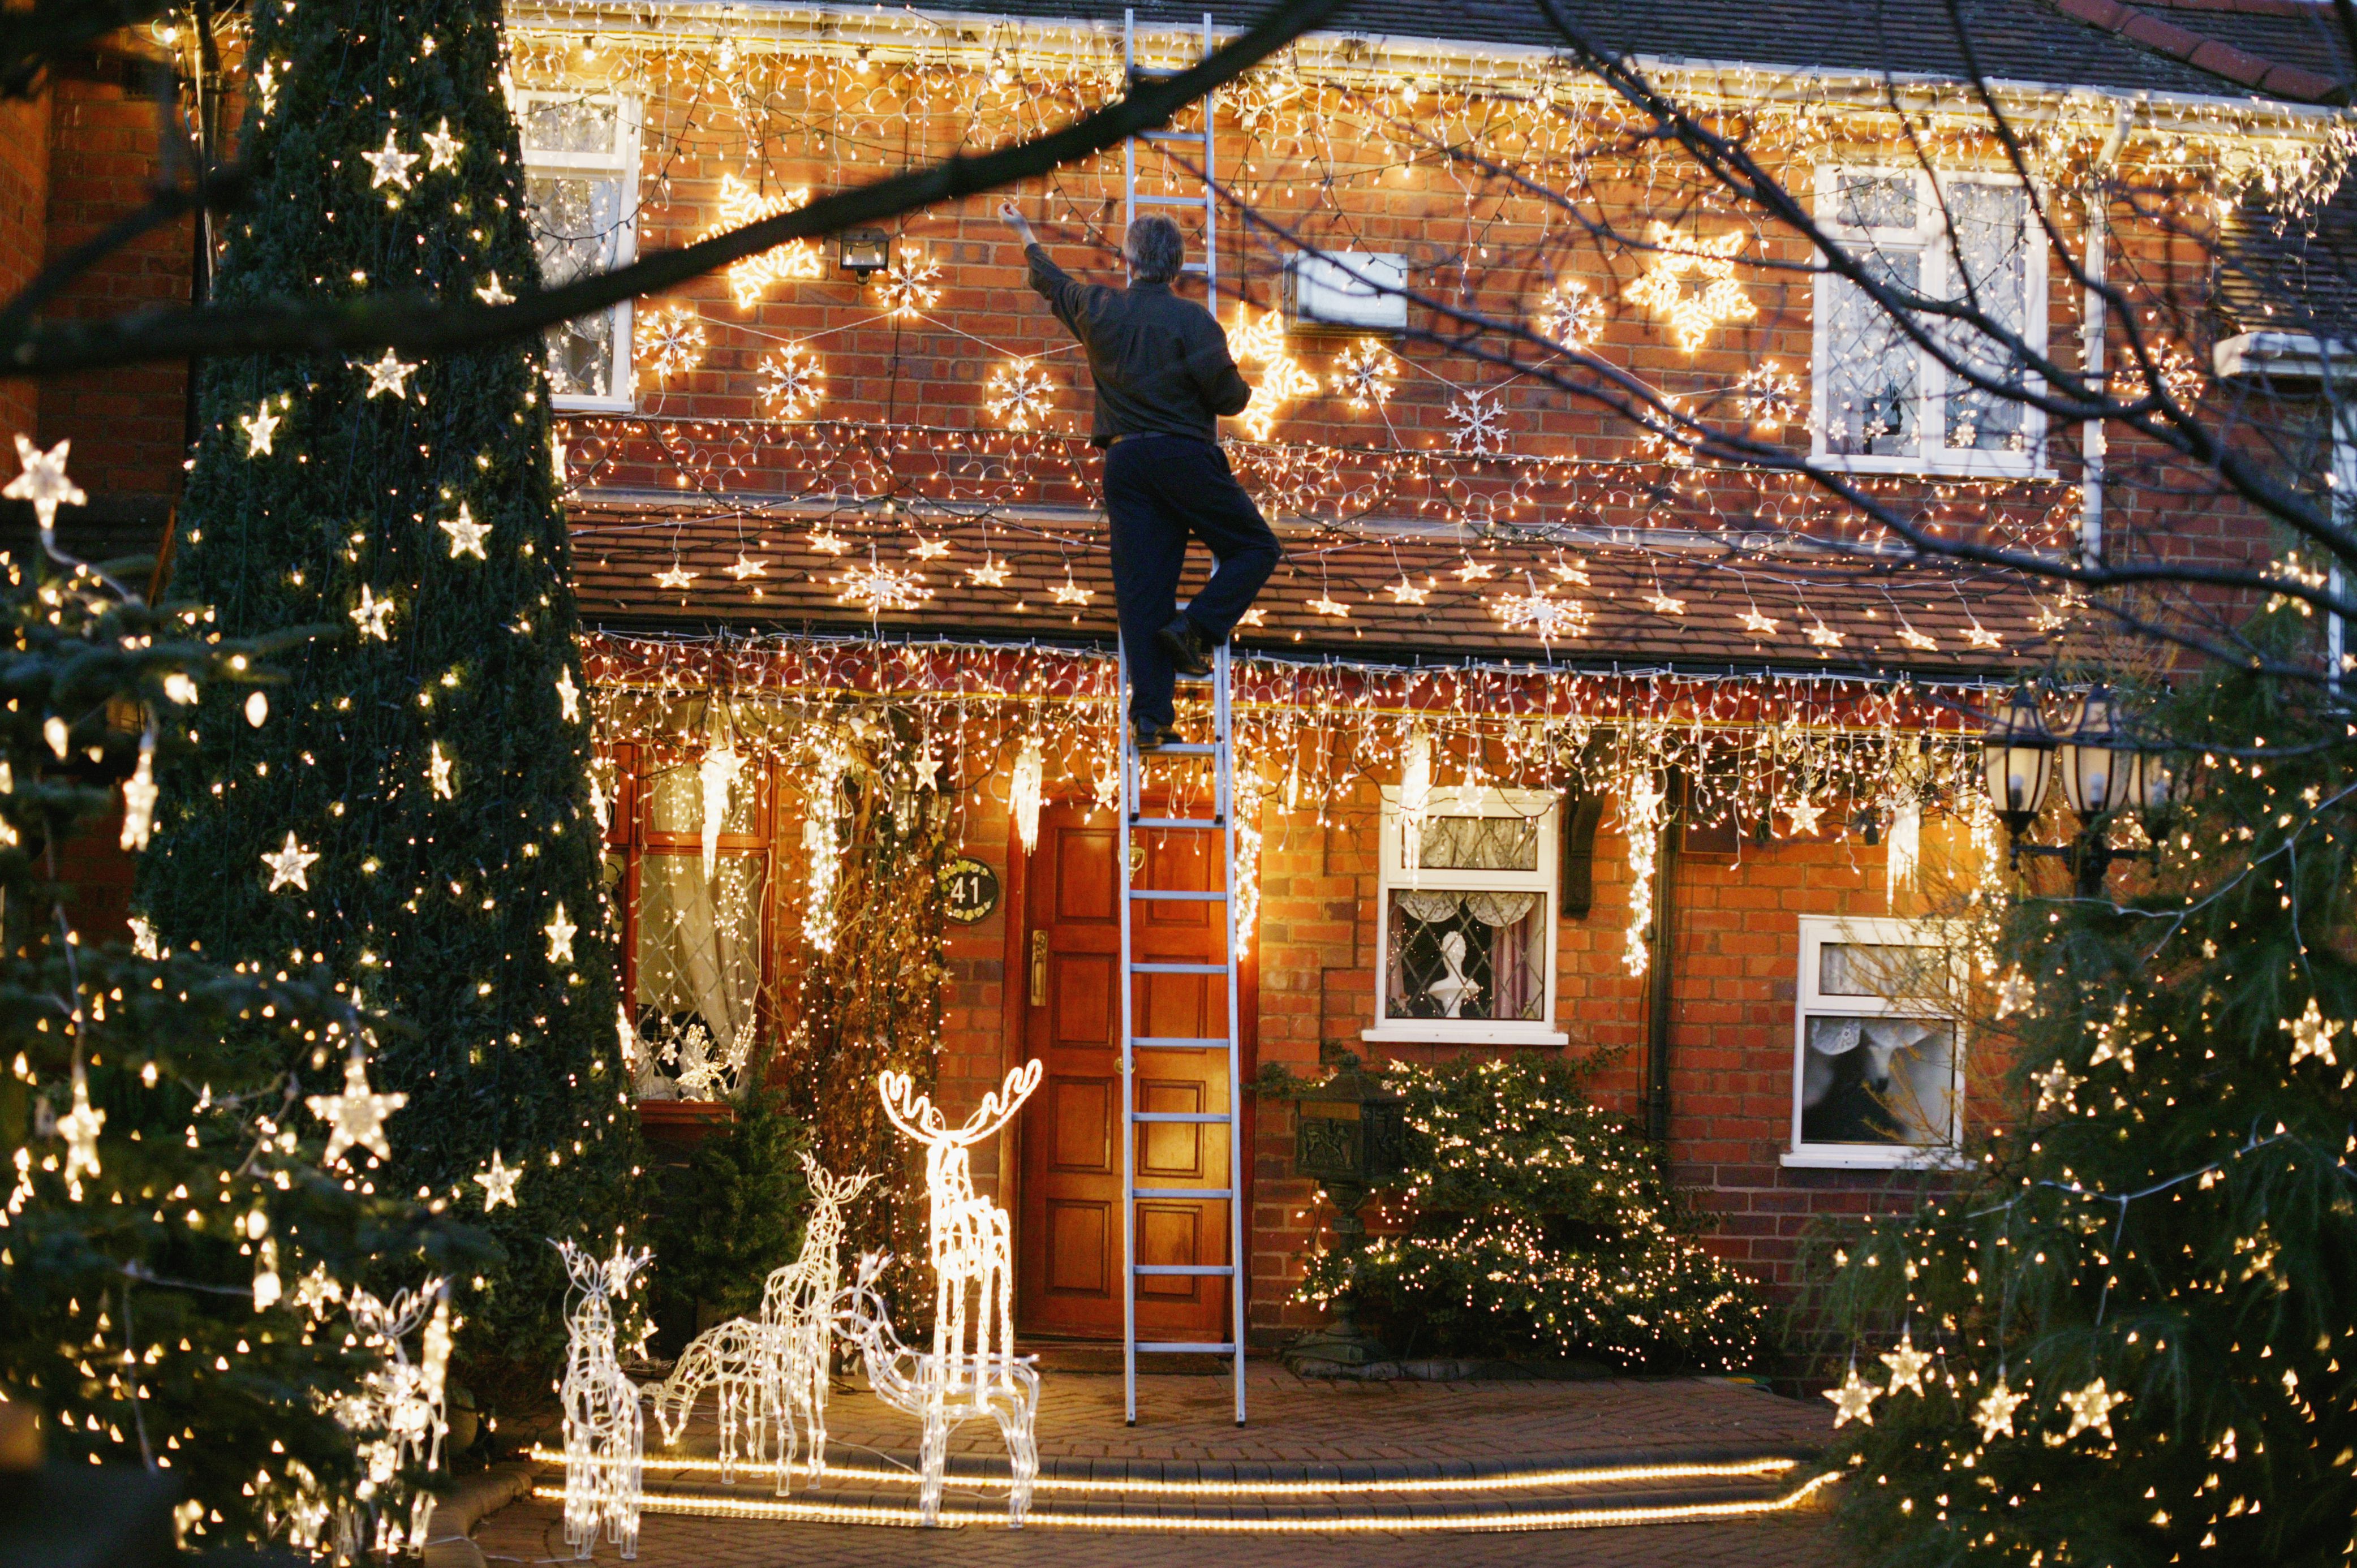 Christmas Lights In The Front Garden Of A House 522104326 5a1ef4ff4e46ba001a9ac0bf 